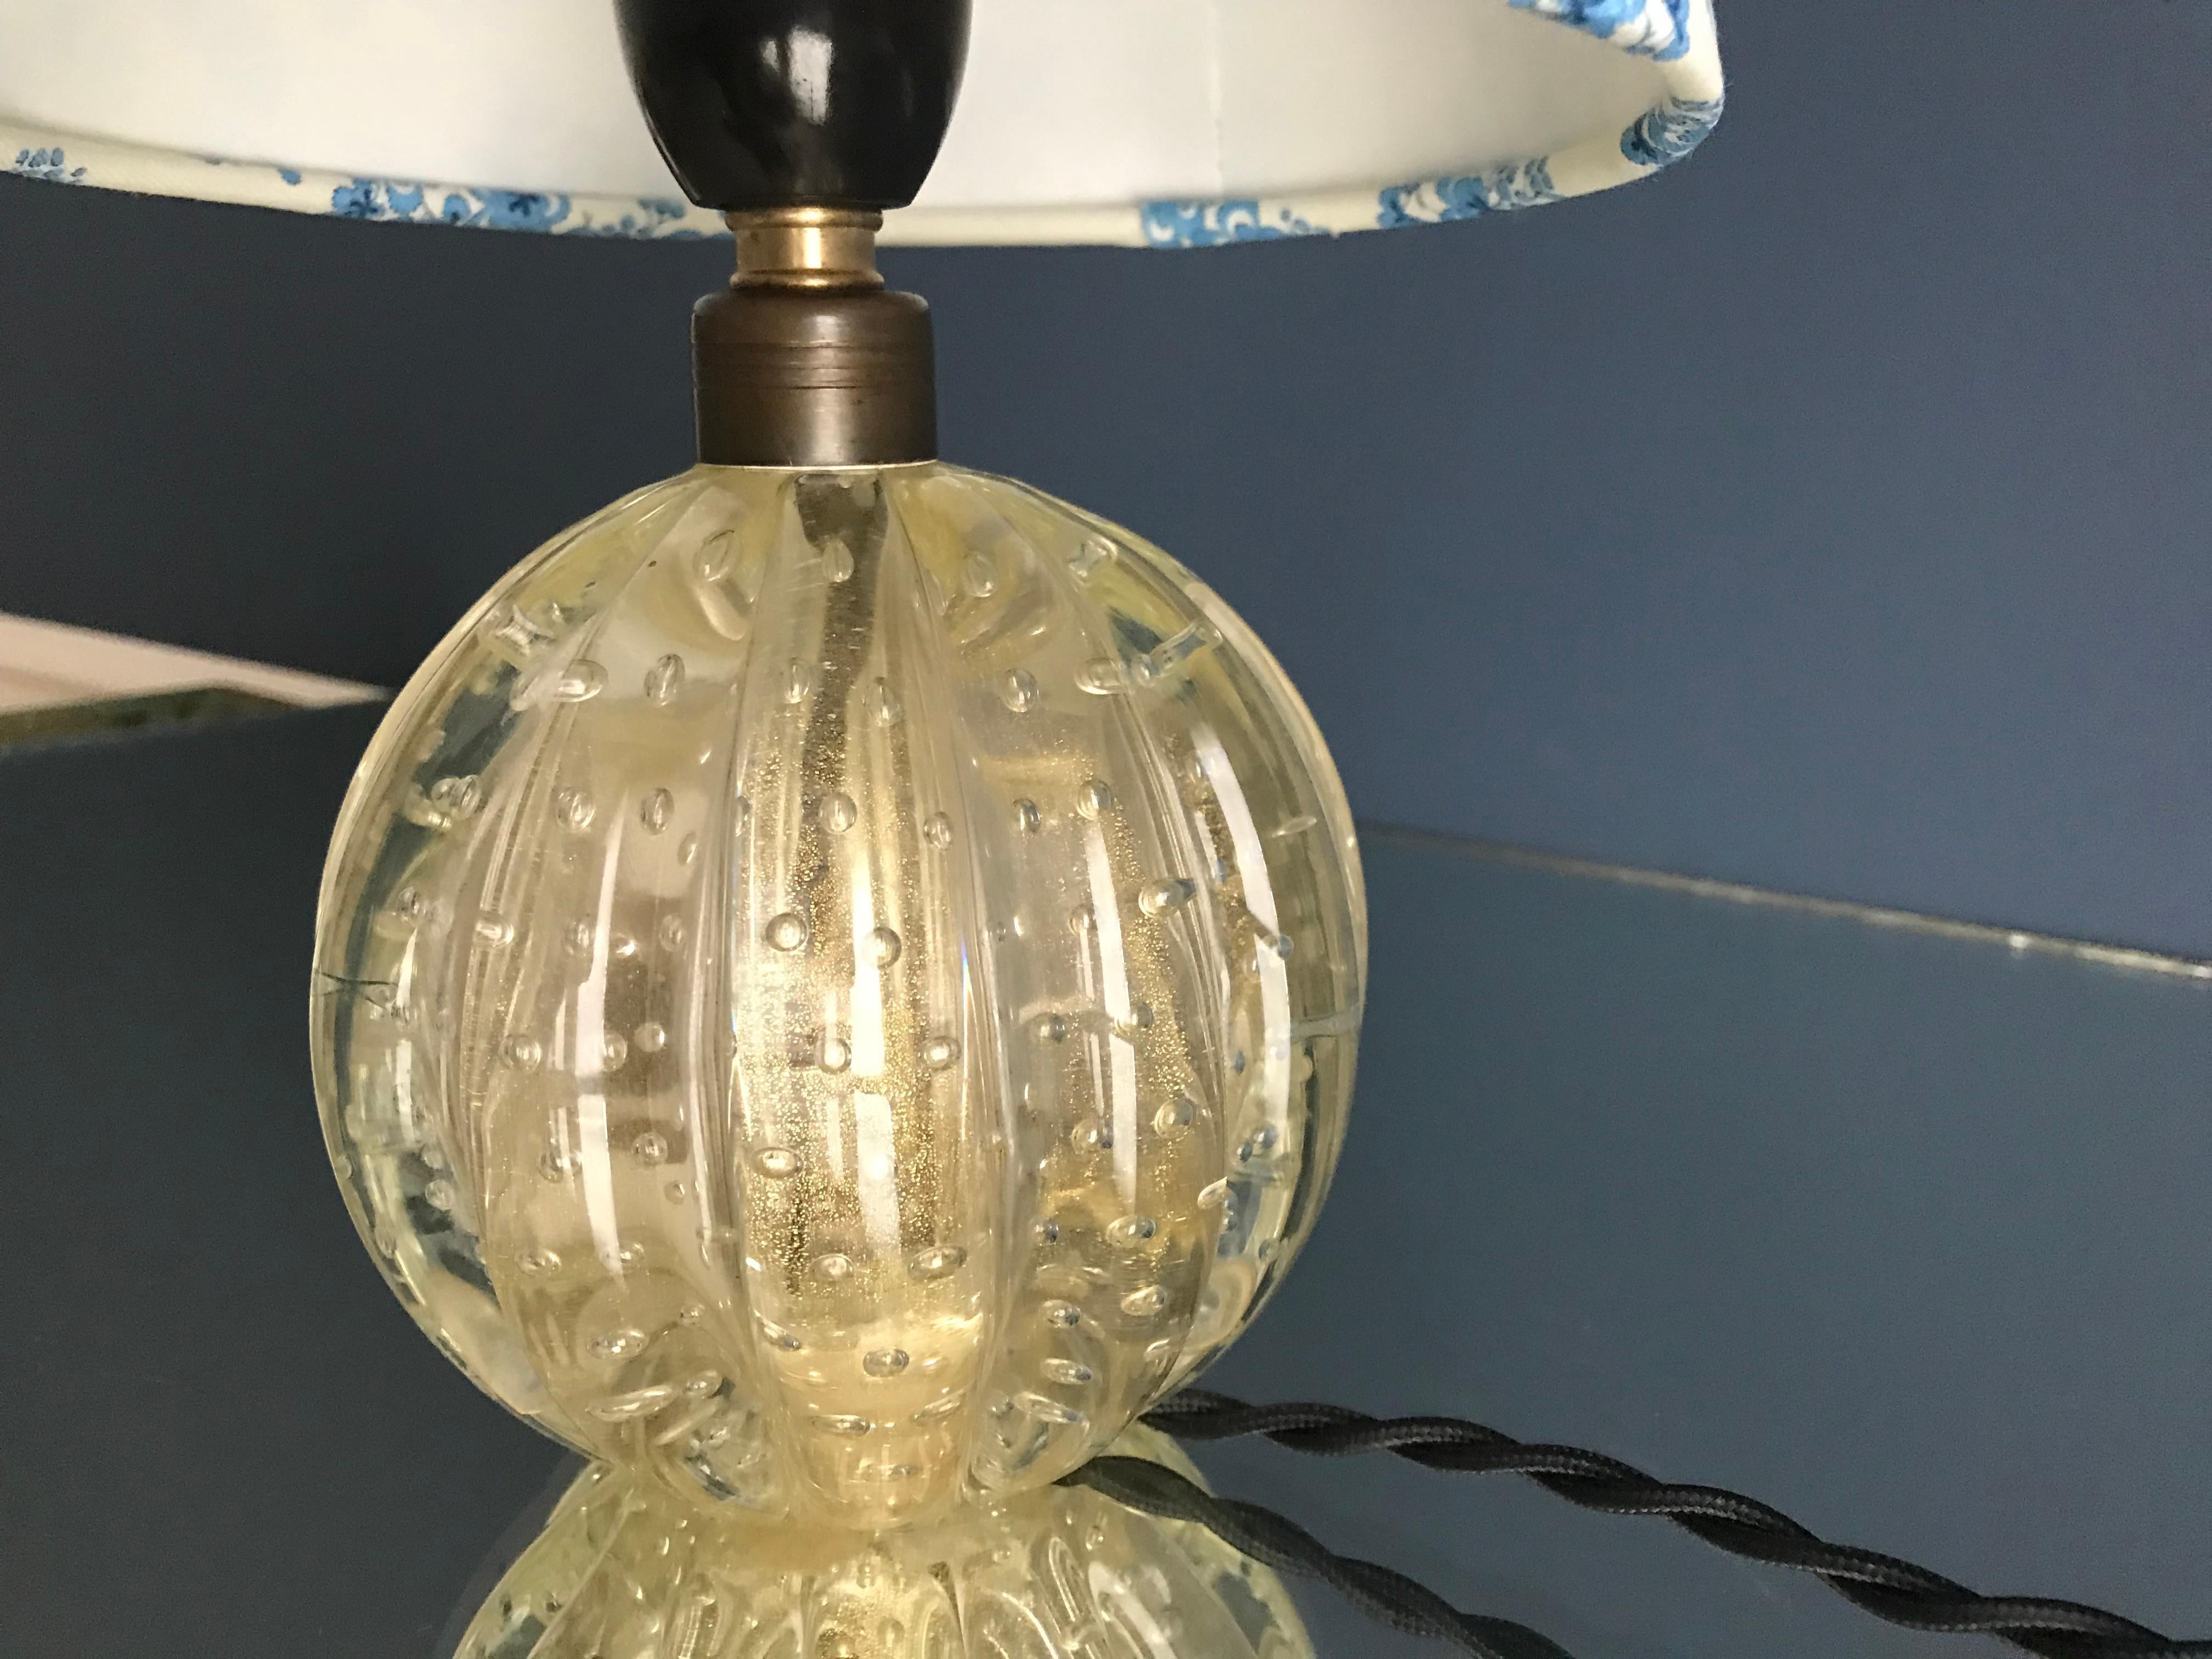 bespoke table lamp